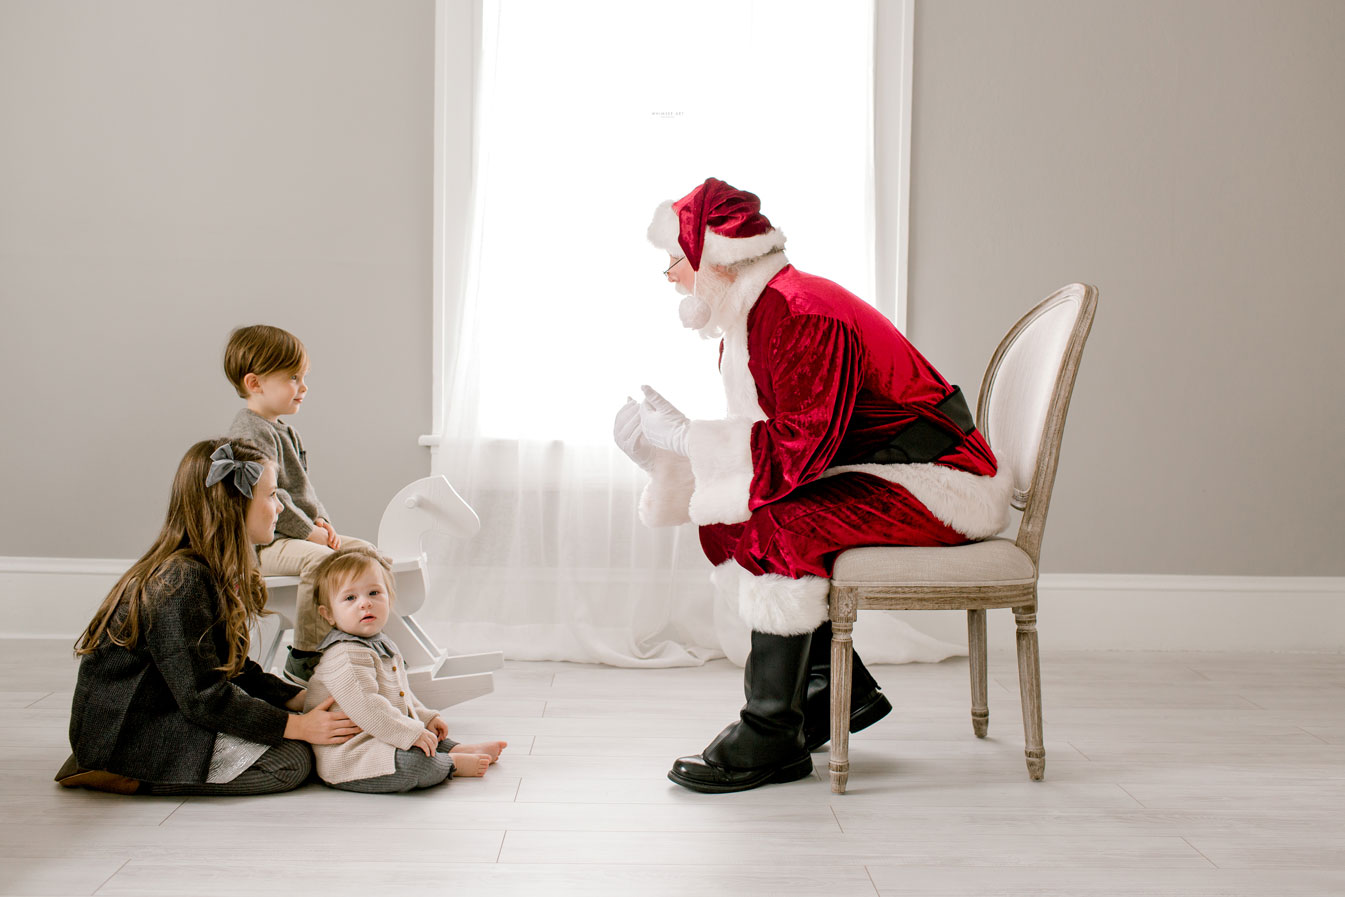 Simply Santa Sessions | Santa Photo session | Whimsee Art Photography